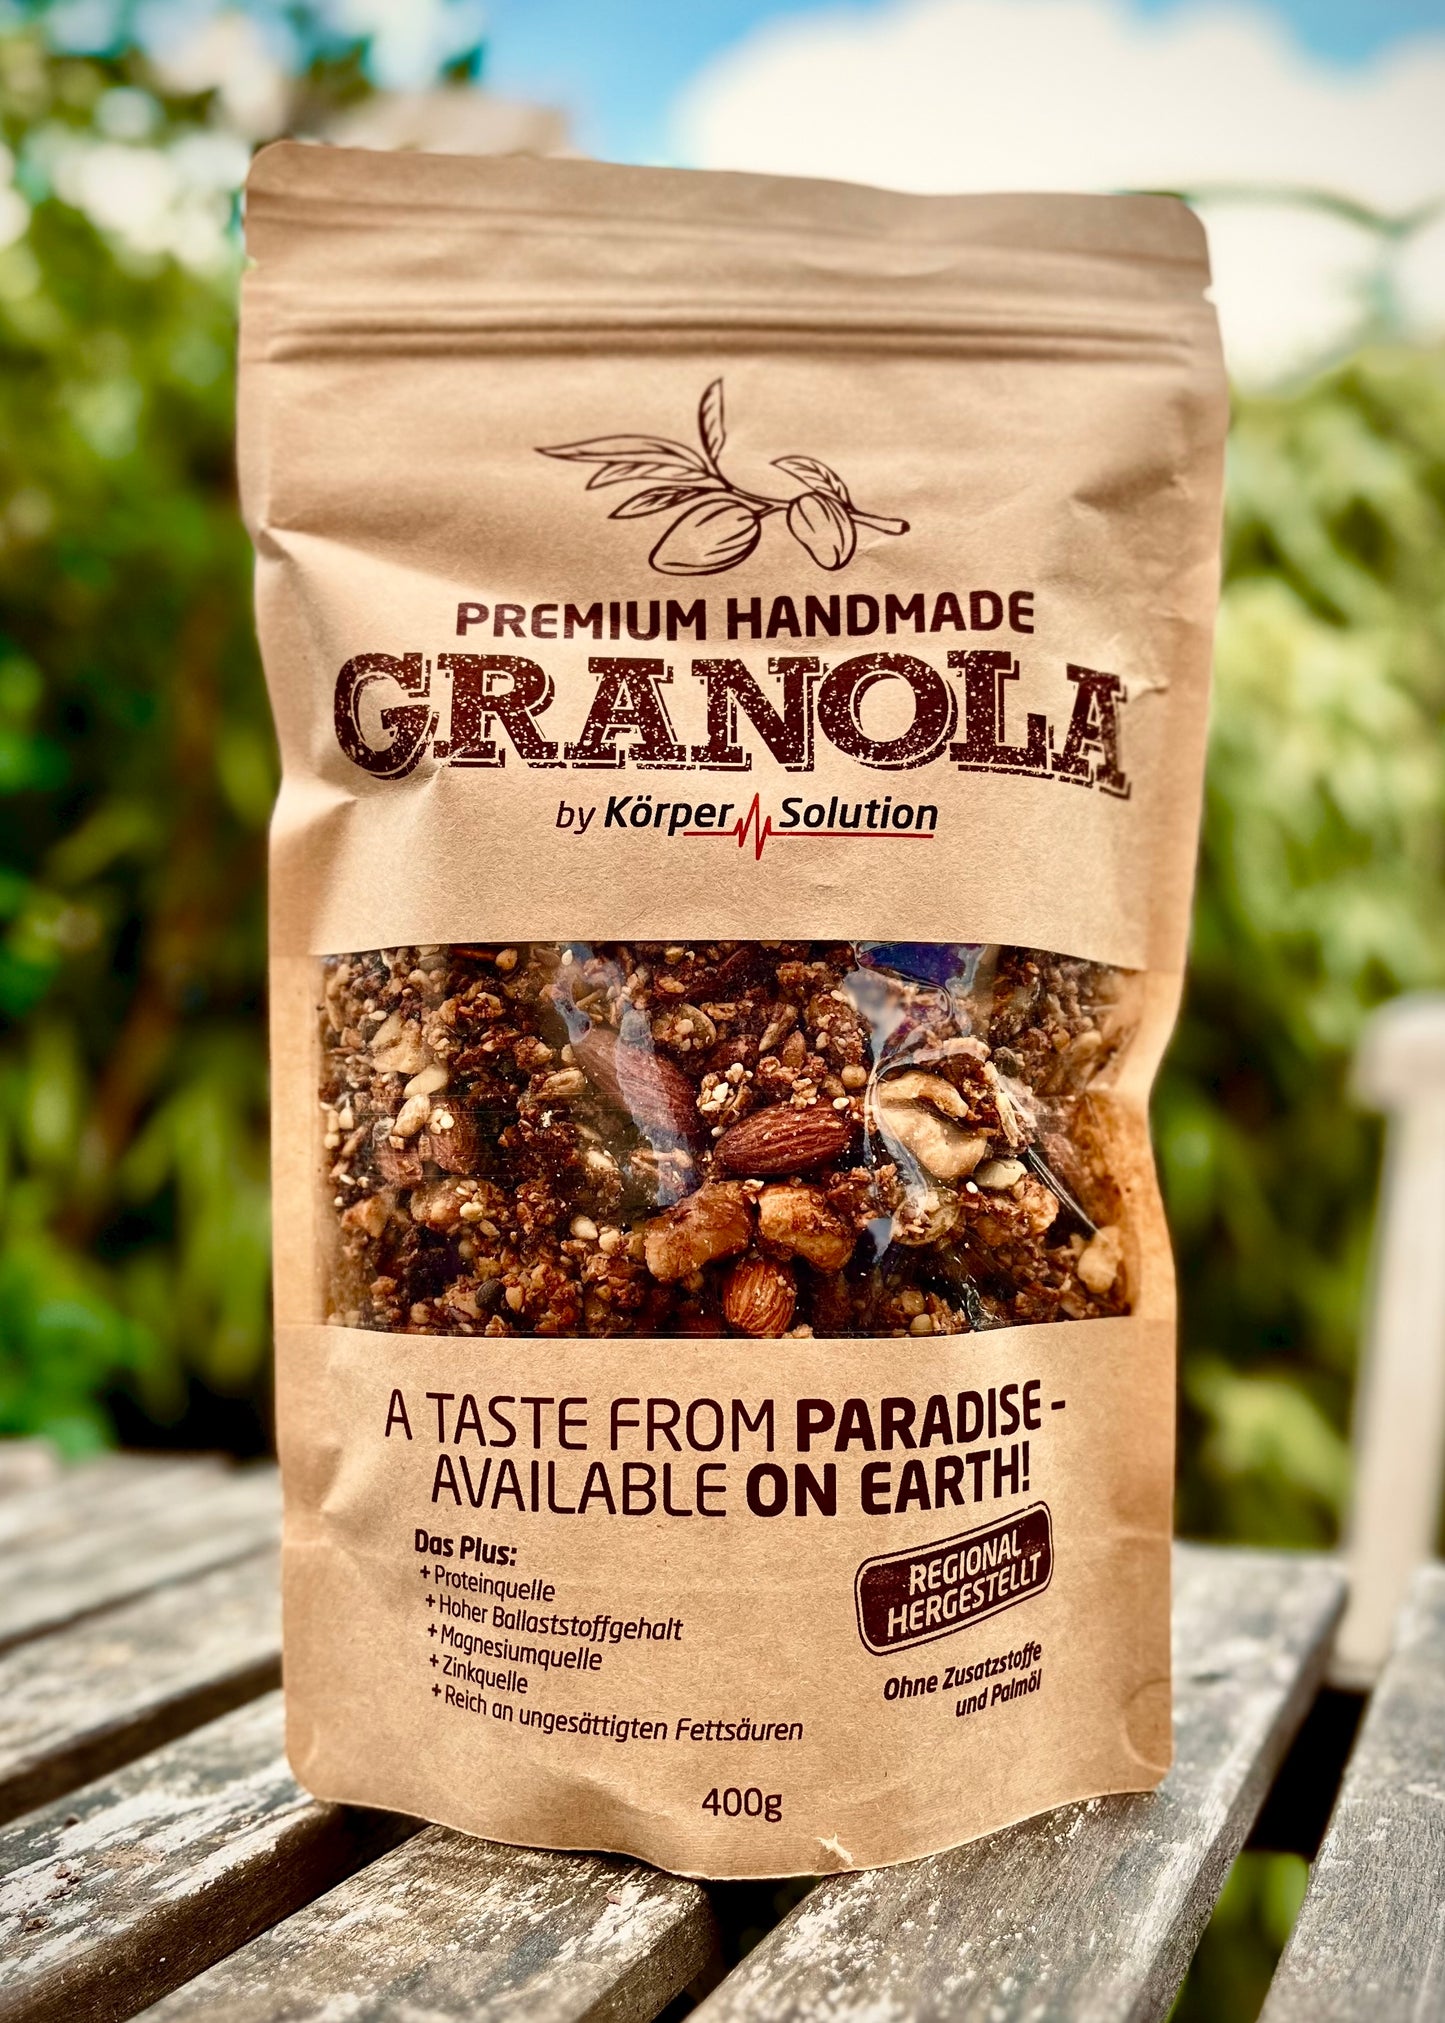 Premium handmade Granola